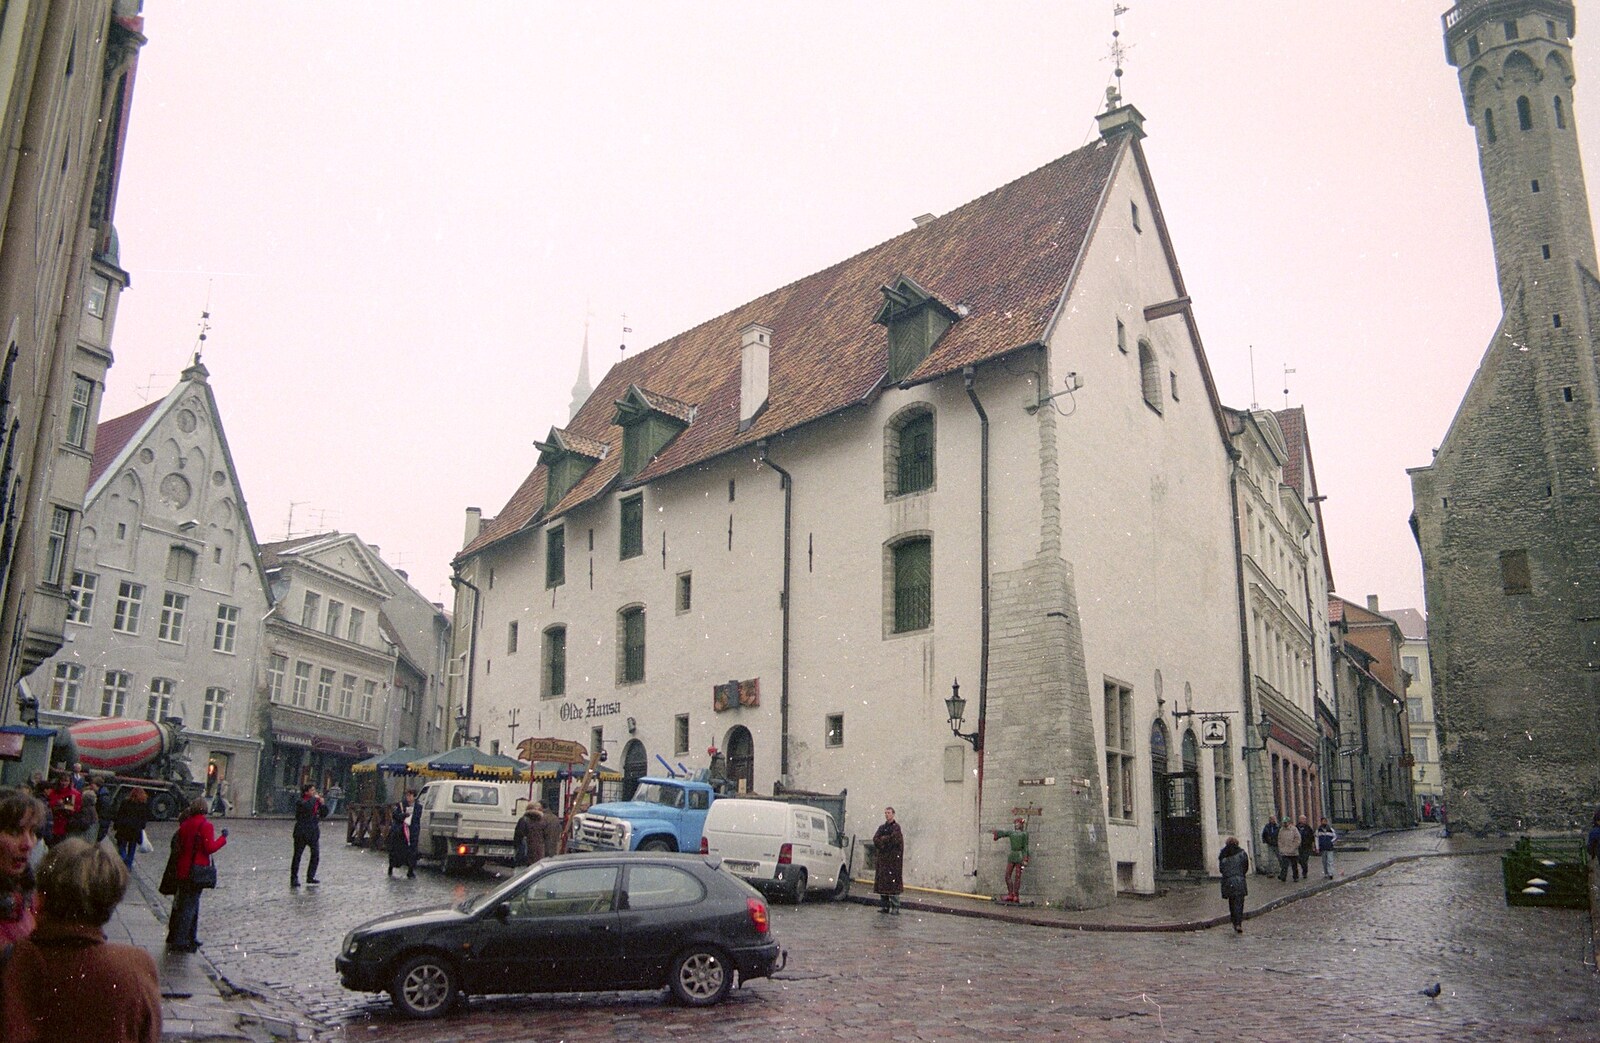 Old Hansa restaurant from A Day Trip to Tallinn, Estonia - 2nd December 1999